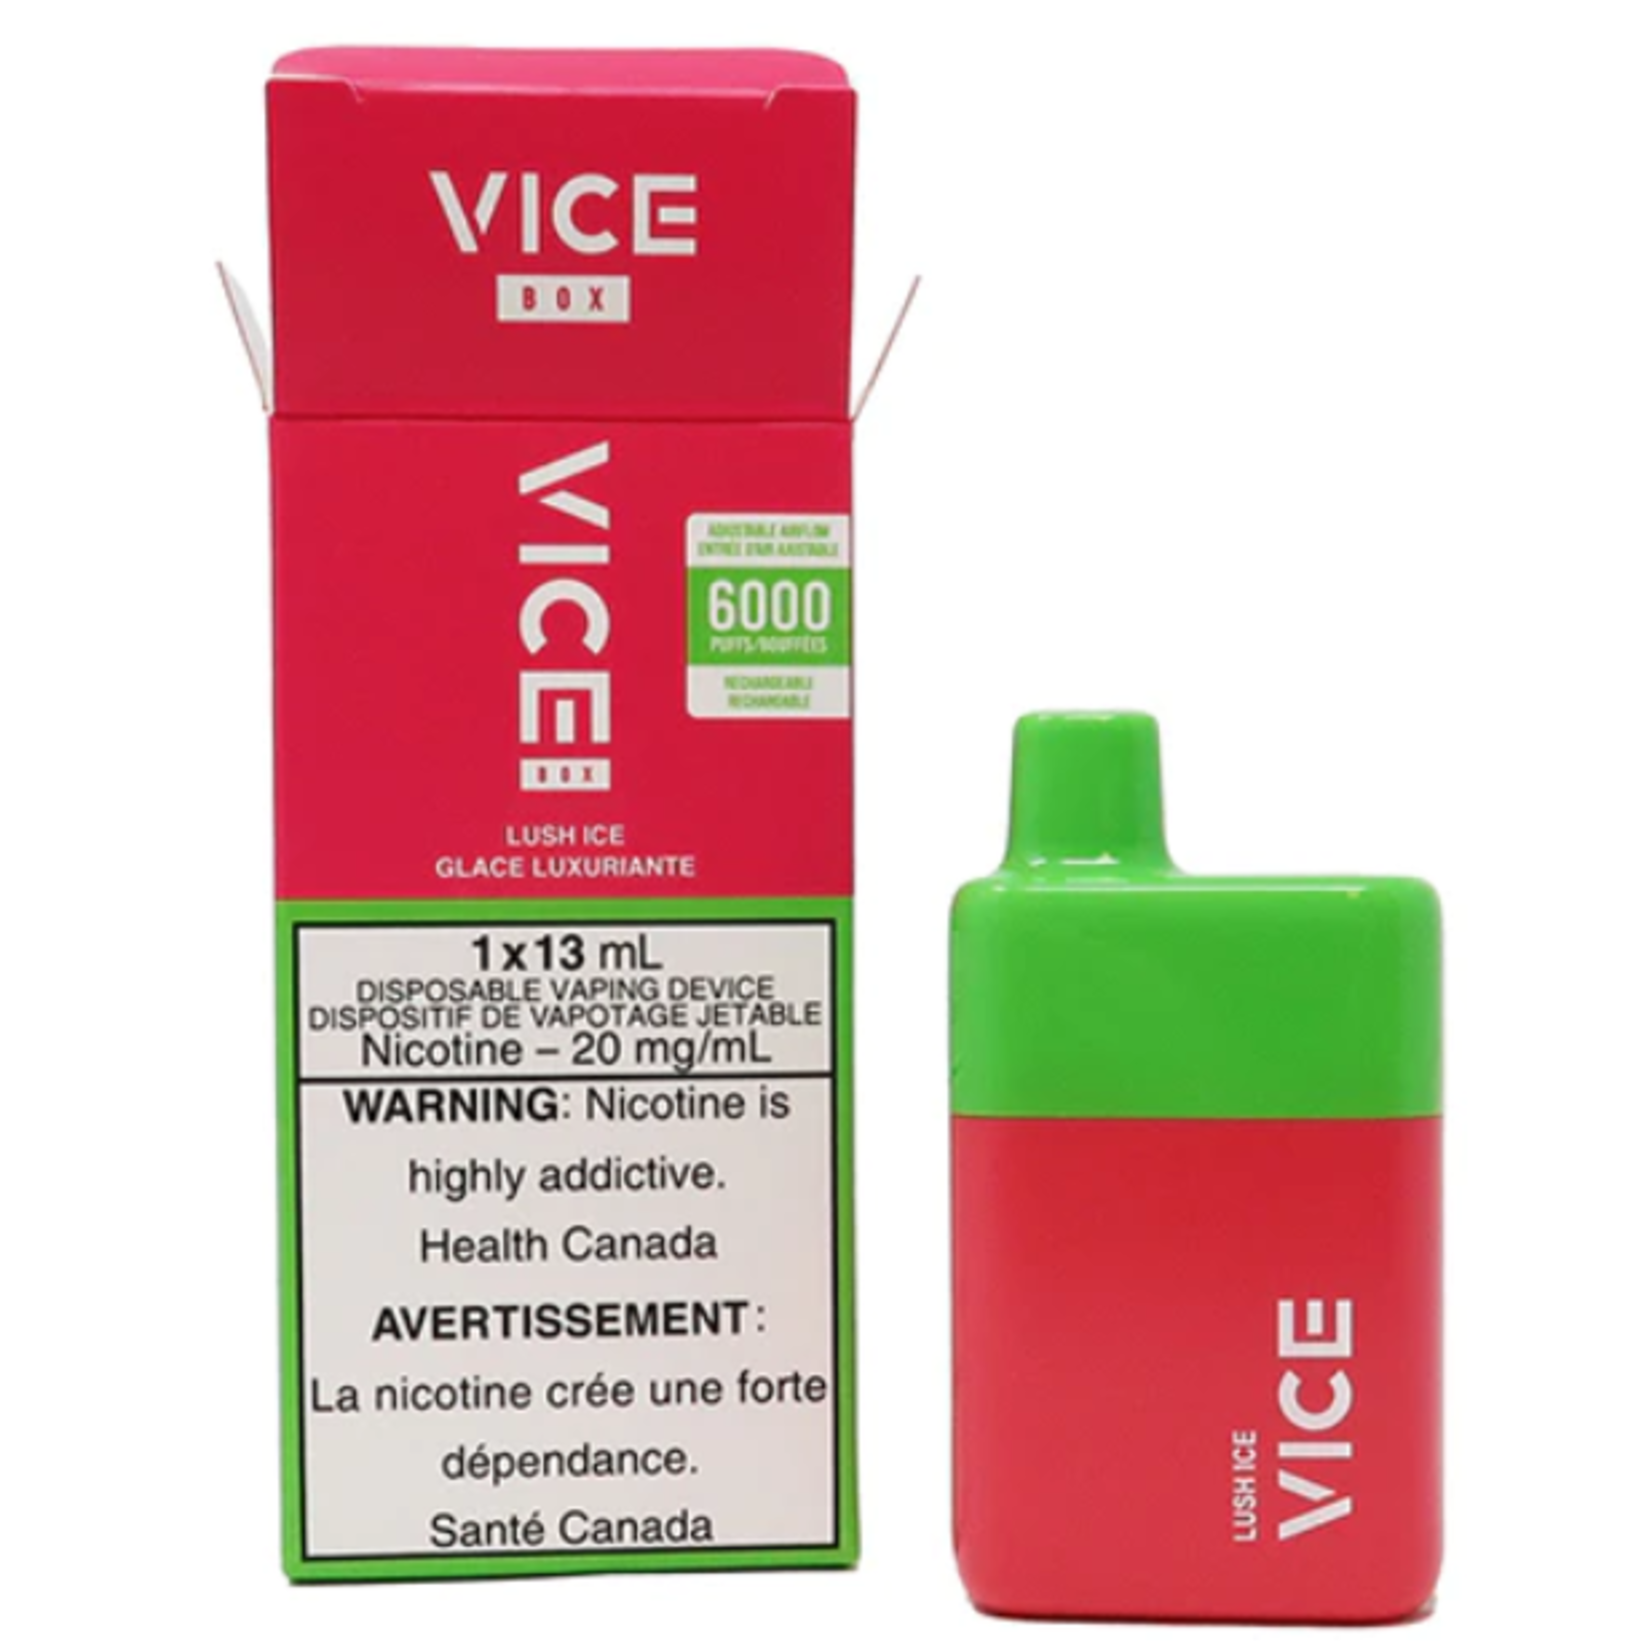 Vice Box 6000 puff